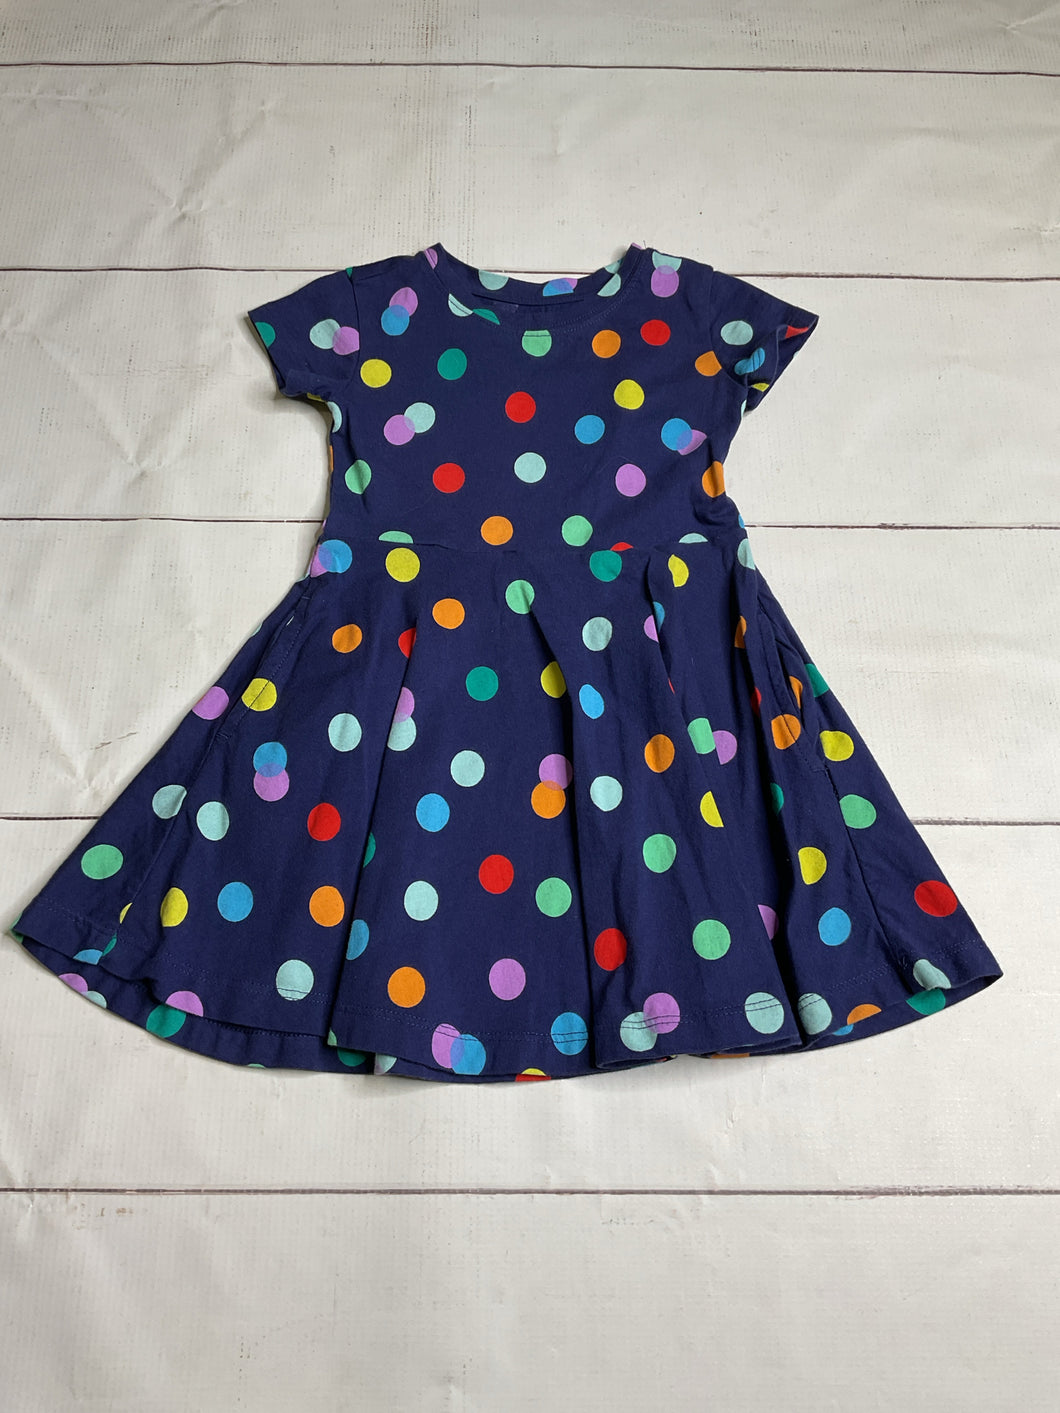 Primary Size 2 Dress